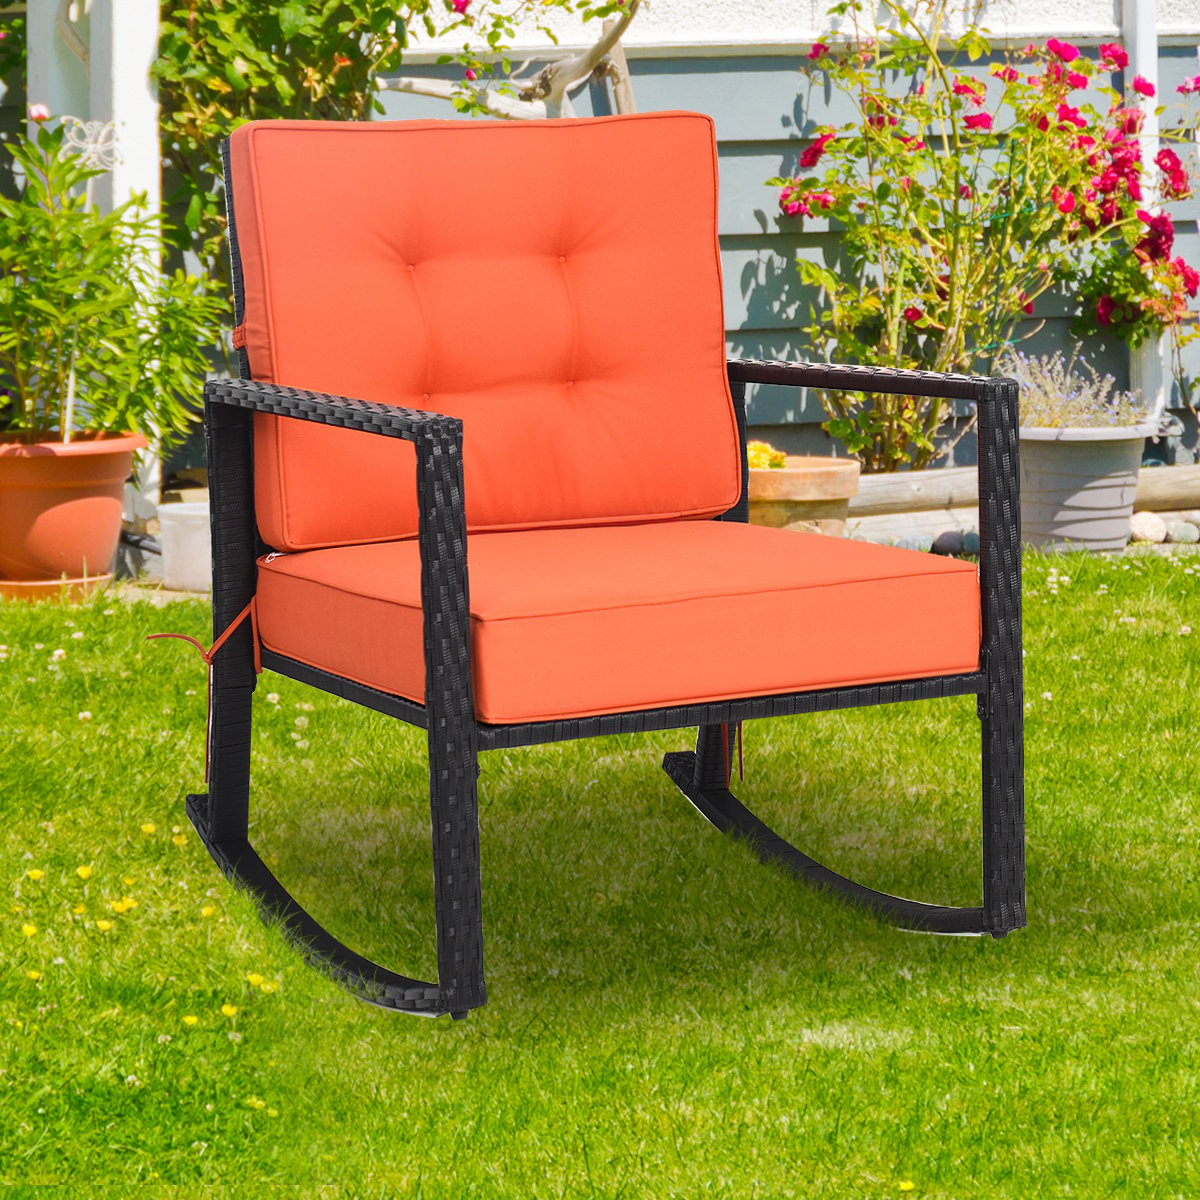 Gymax Outdoor Wicker Rocking Chair Patio Lawn Rattan Single Chair Glider W/ Cushion